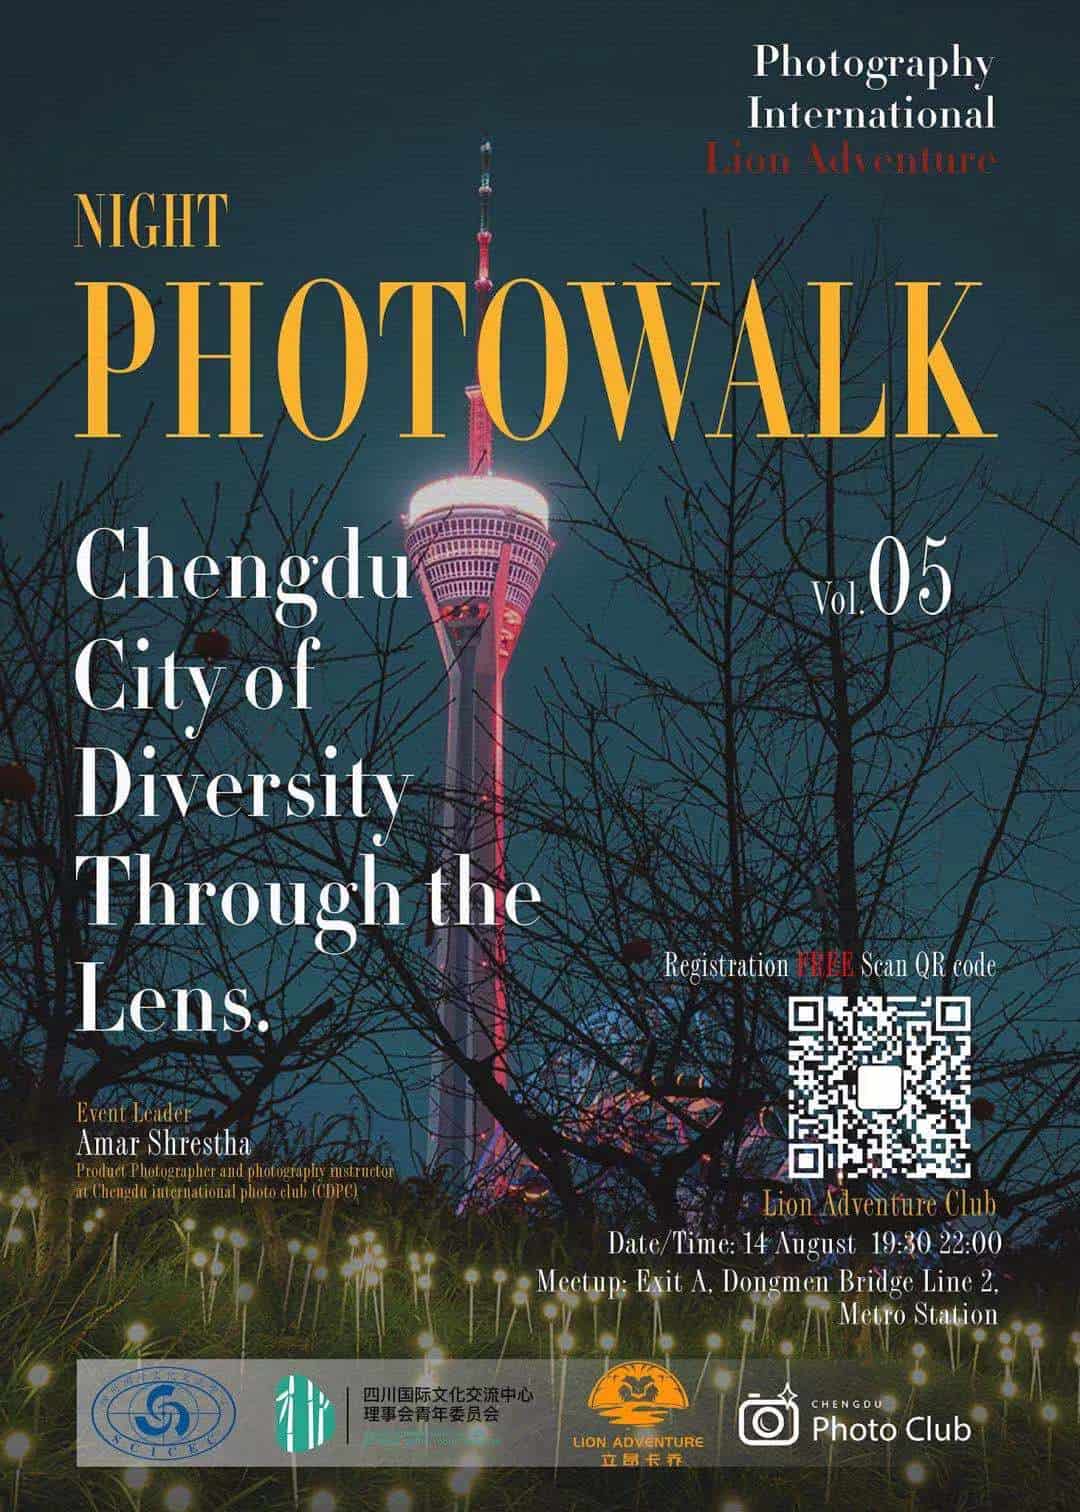 Photowalk Chengdu City of Diversity through the Lens chengdu expat